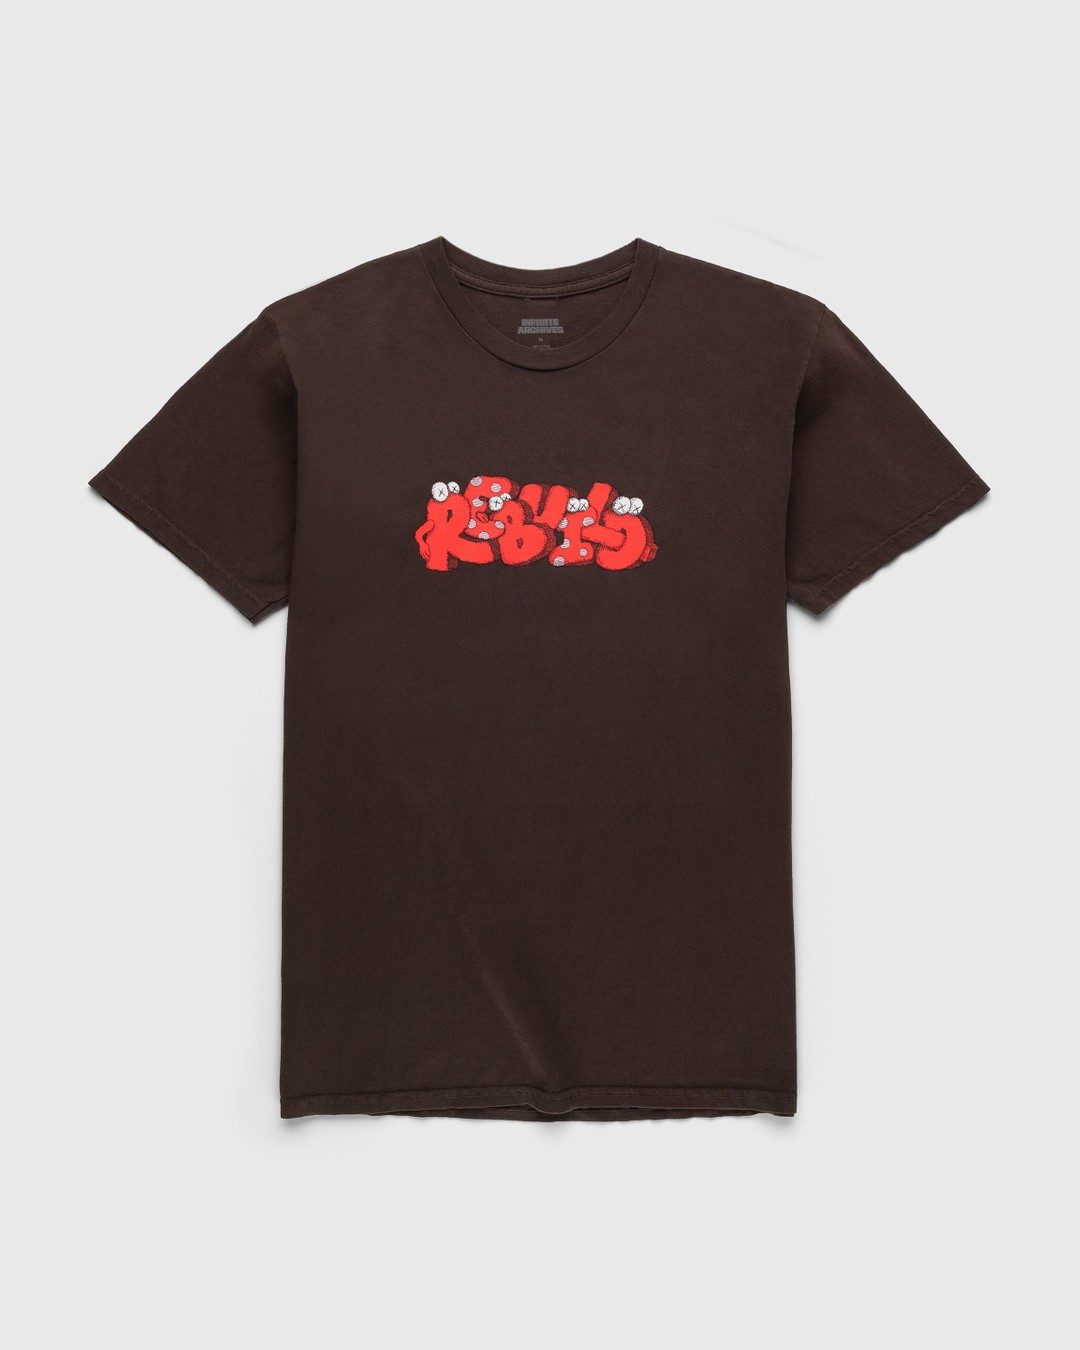 Infinite Archives x KAWS x Rebuild Foundation – Rebuild T-Shirt Brown - T-Shirts - Brown - Image 1